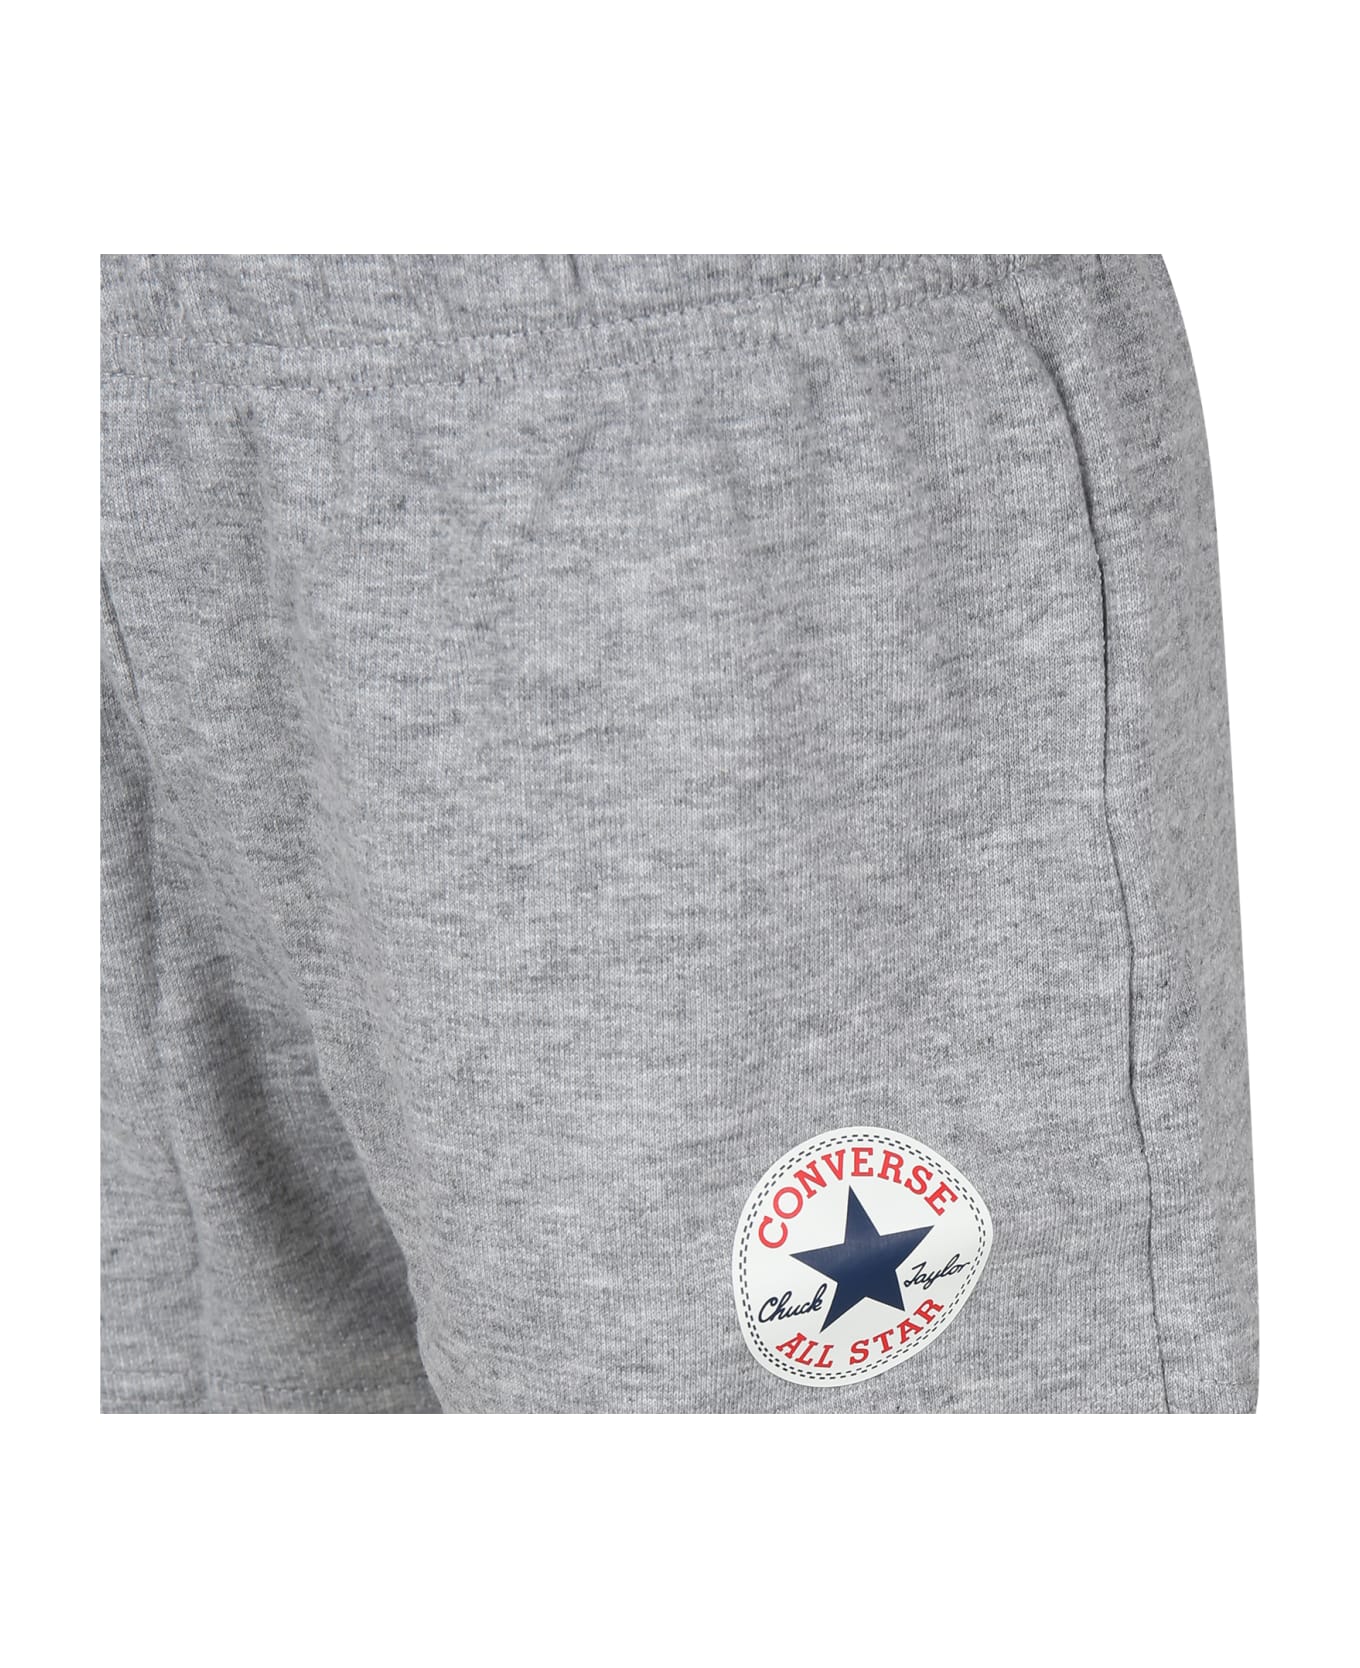 Converse Grey Shorts For Girl With Logo Print - Grey